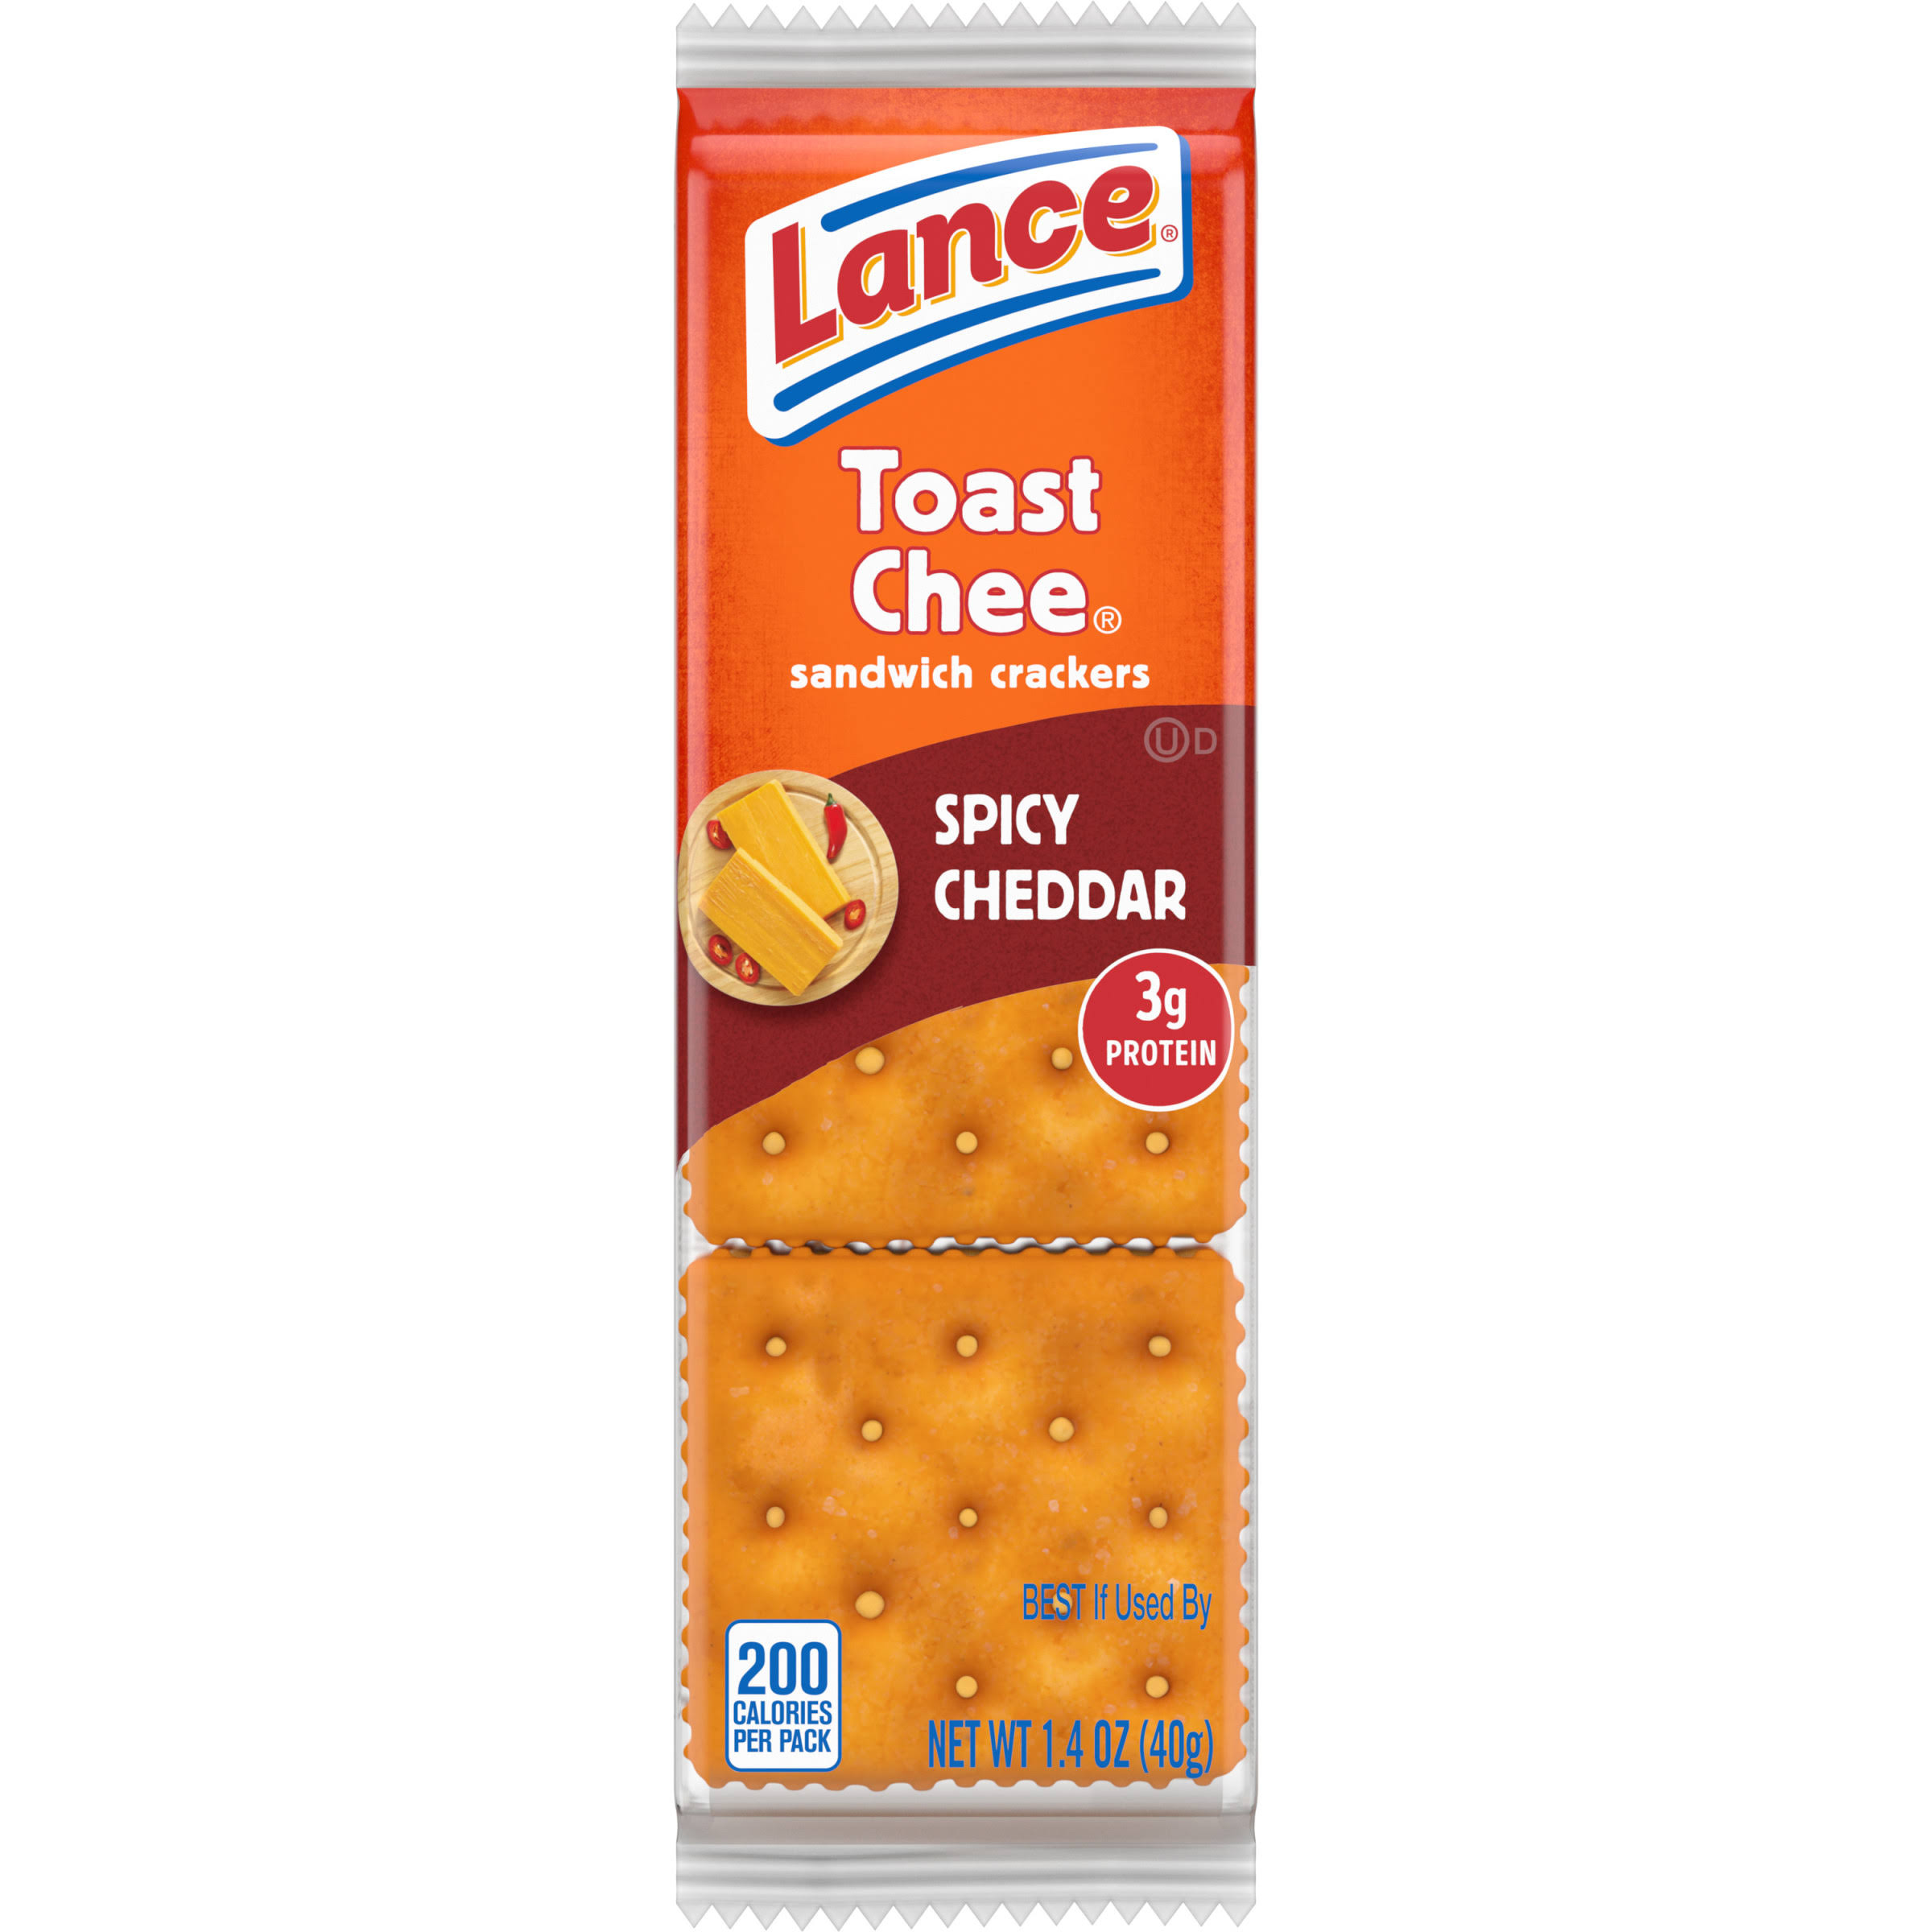 Lance ToastChee Spicy Cheddar Sandwich Crackers - 1.41 oz